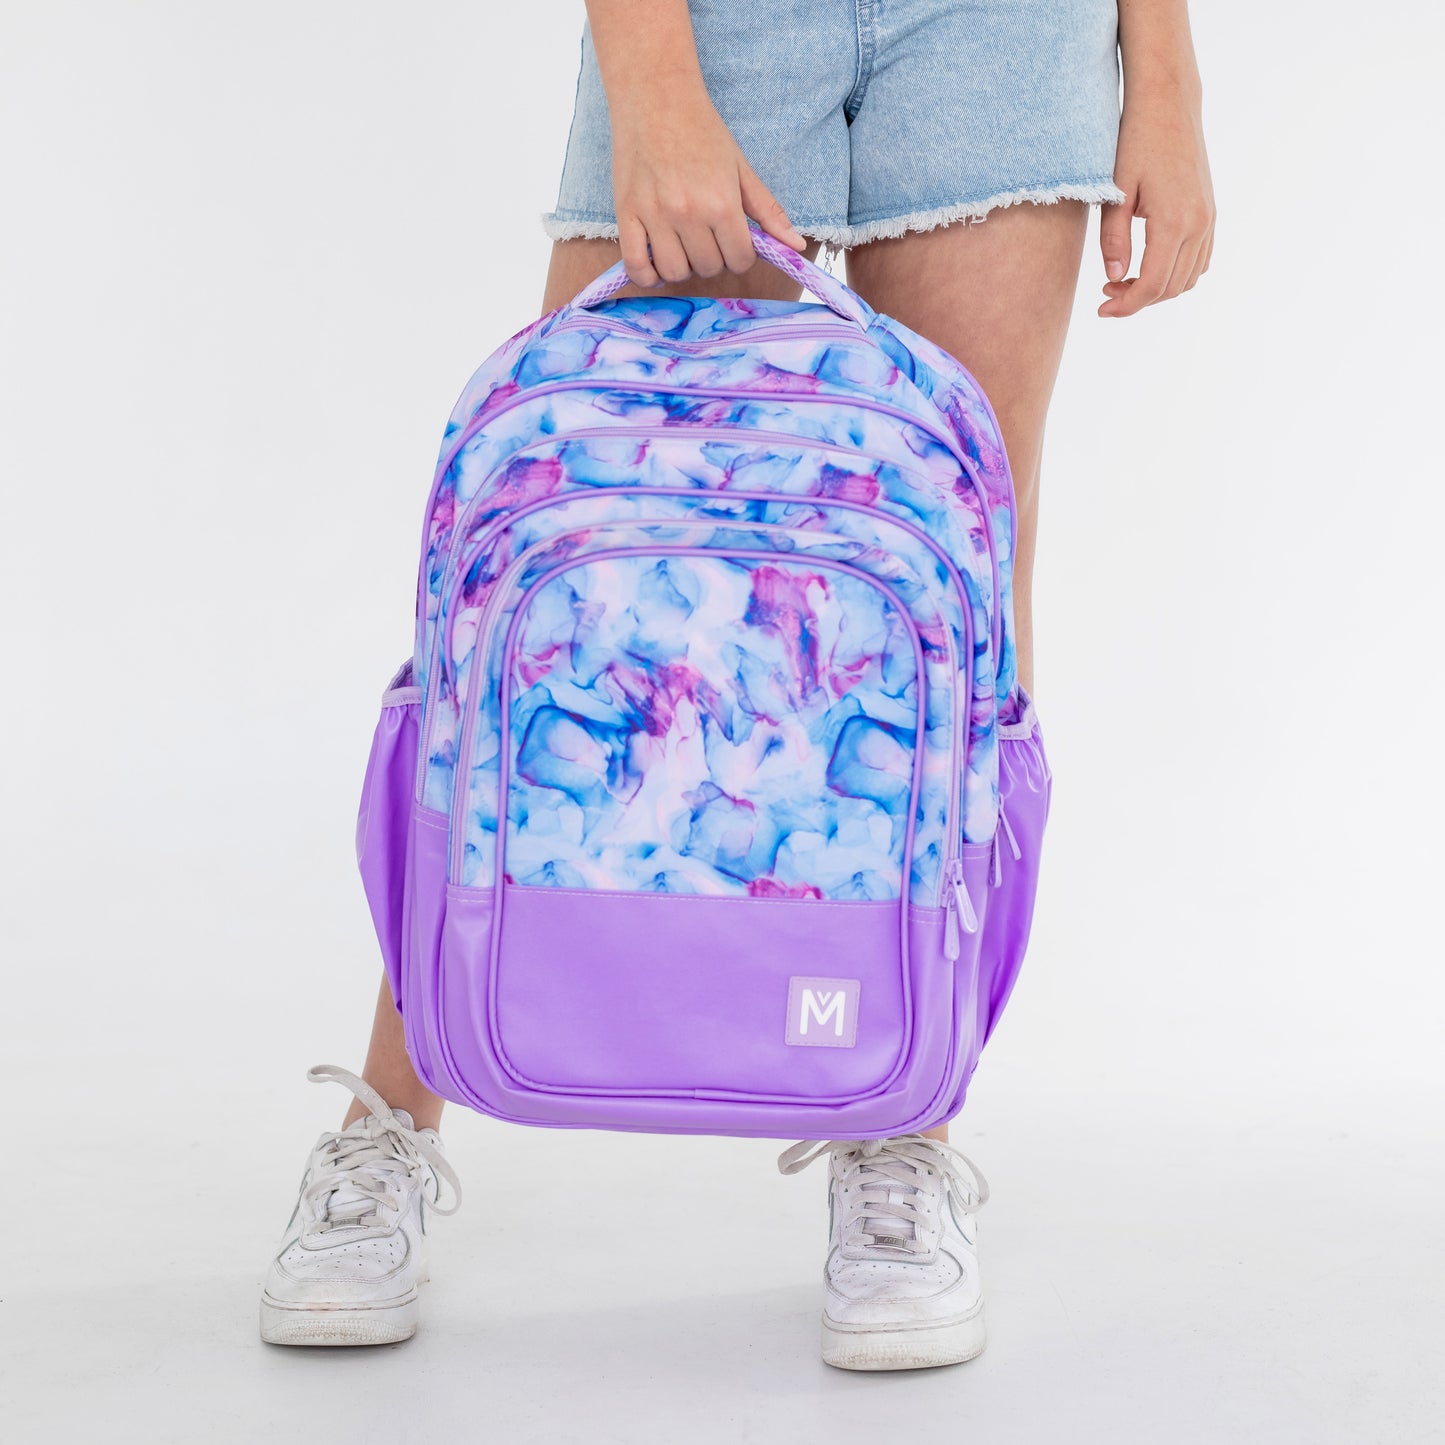 MontiiCo School Bag Package - Aurora